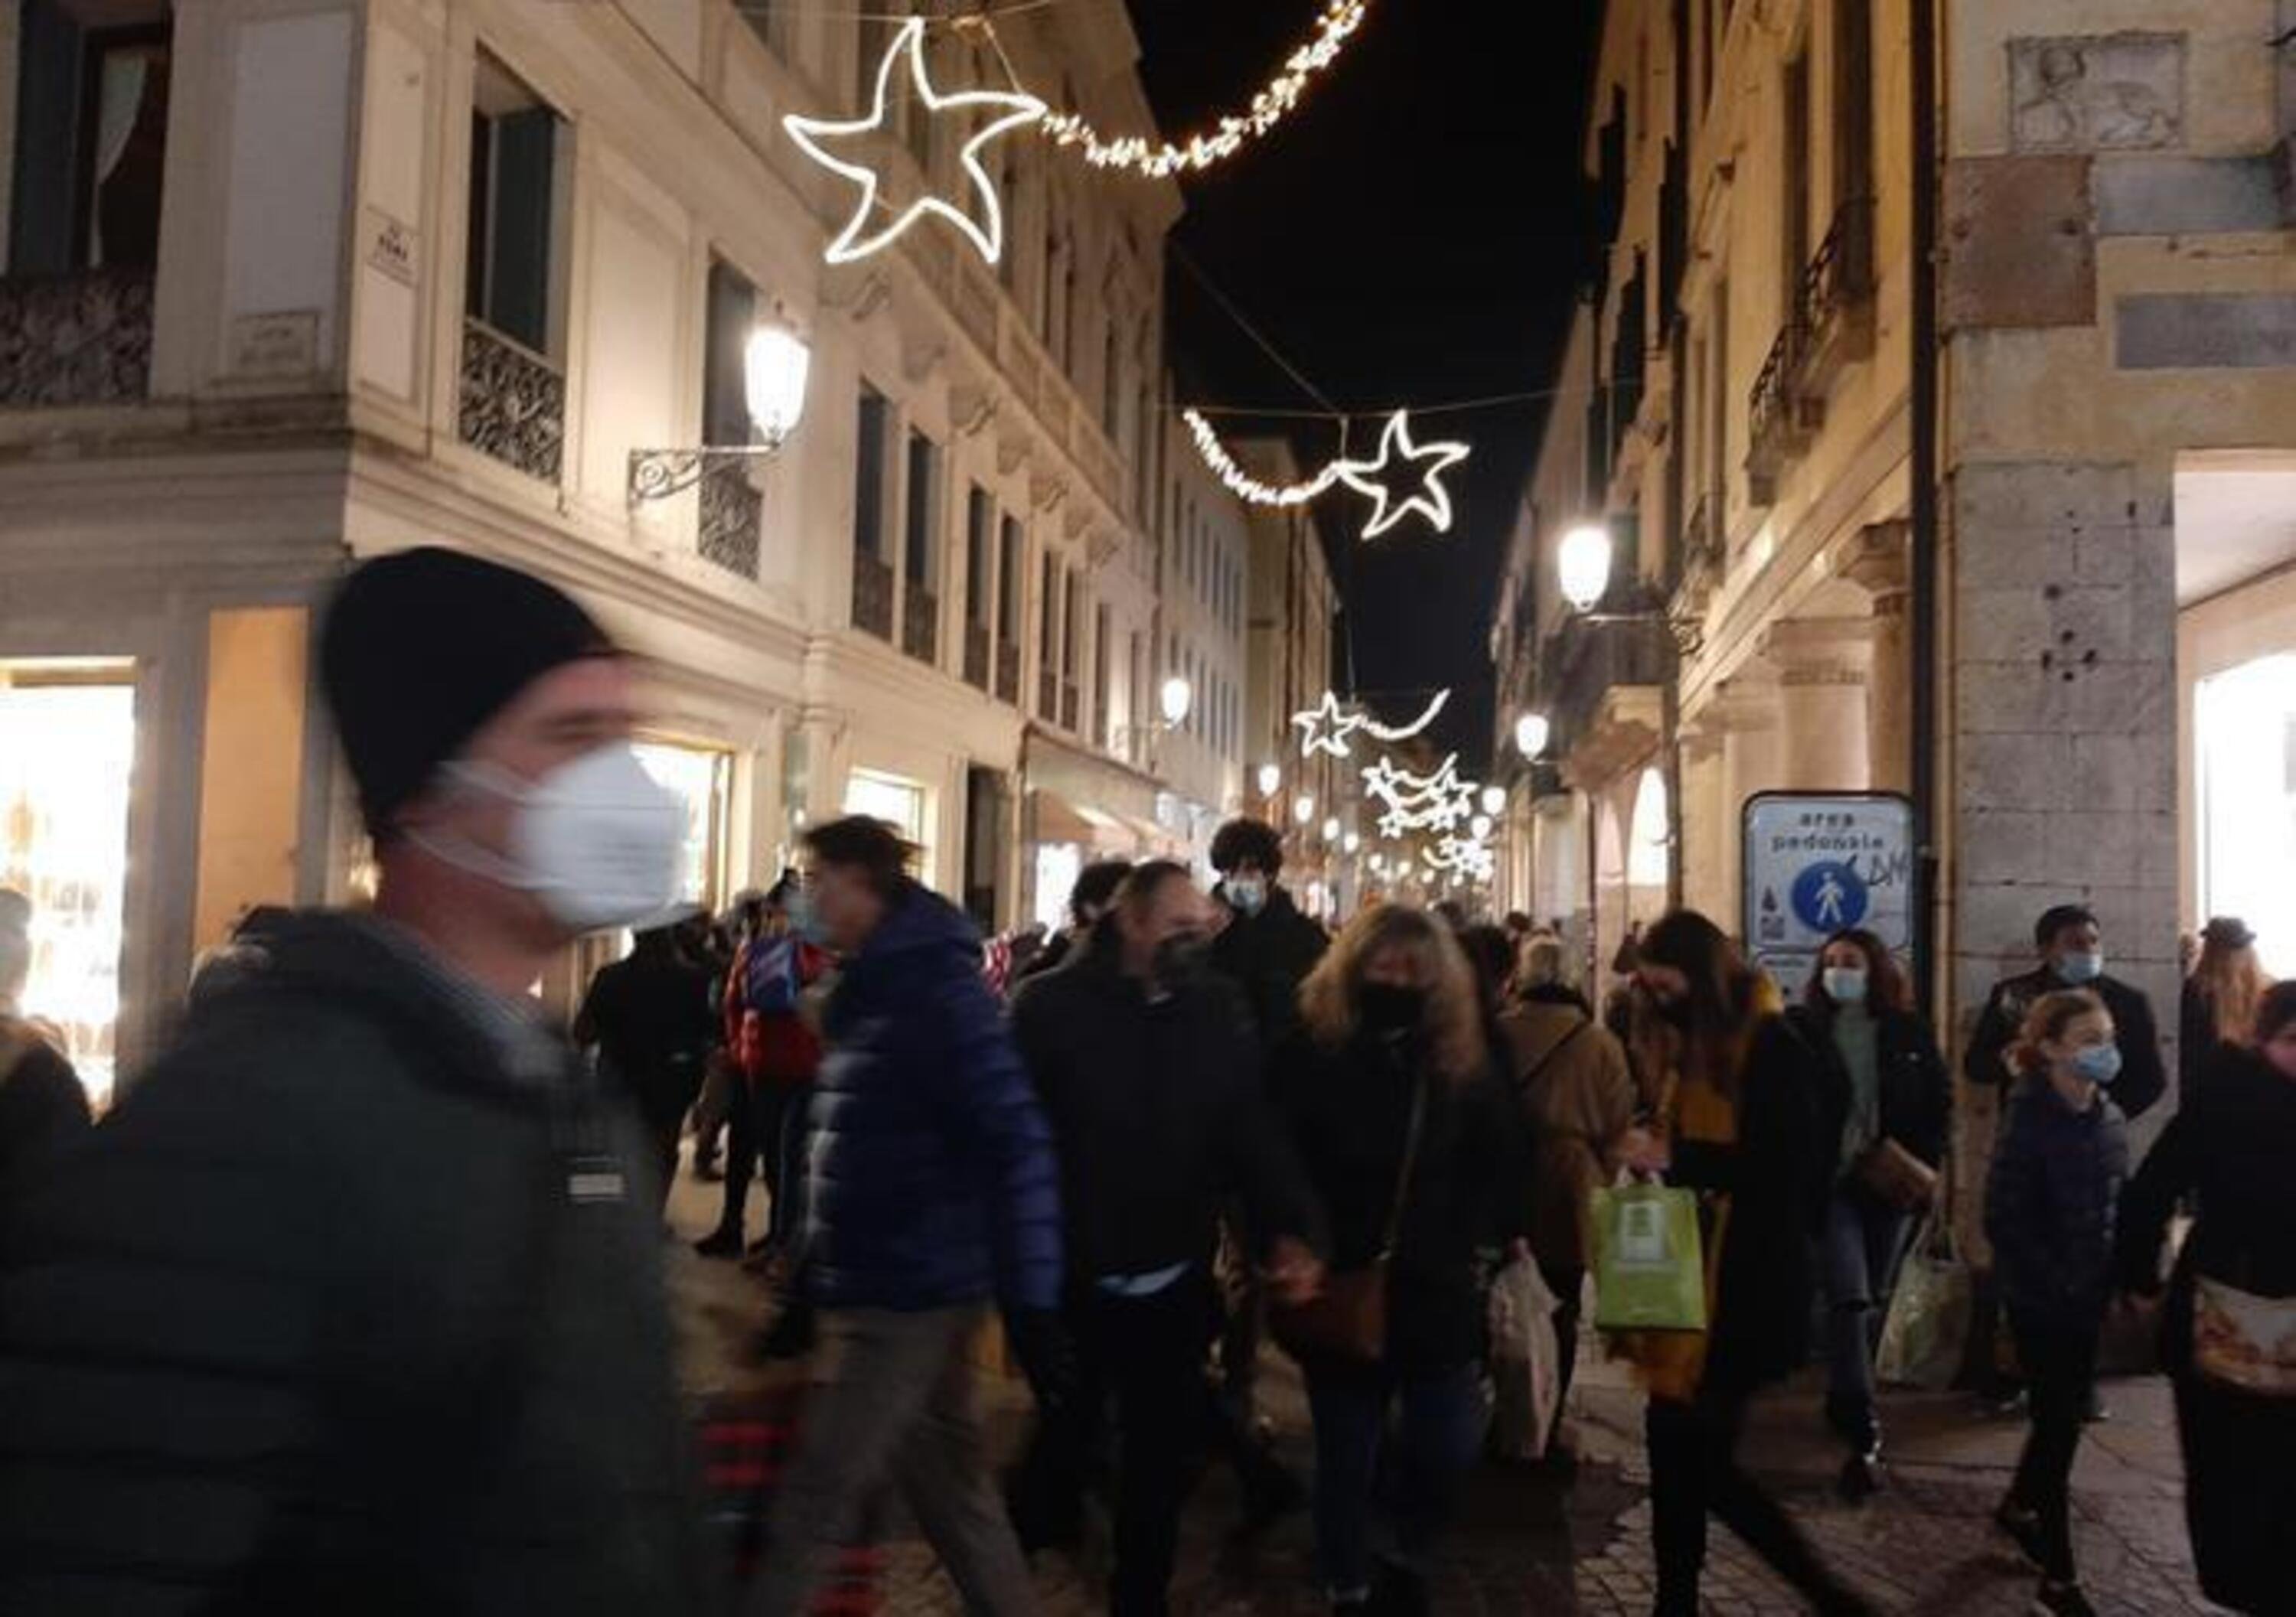 Natale 2020: ipotesi zona rossa o arancio in tutta Italia nei festivi